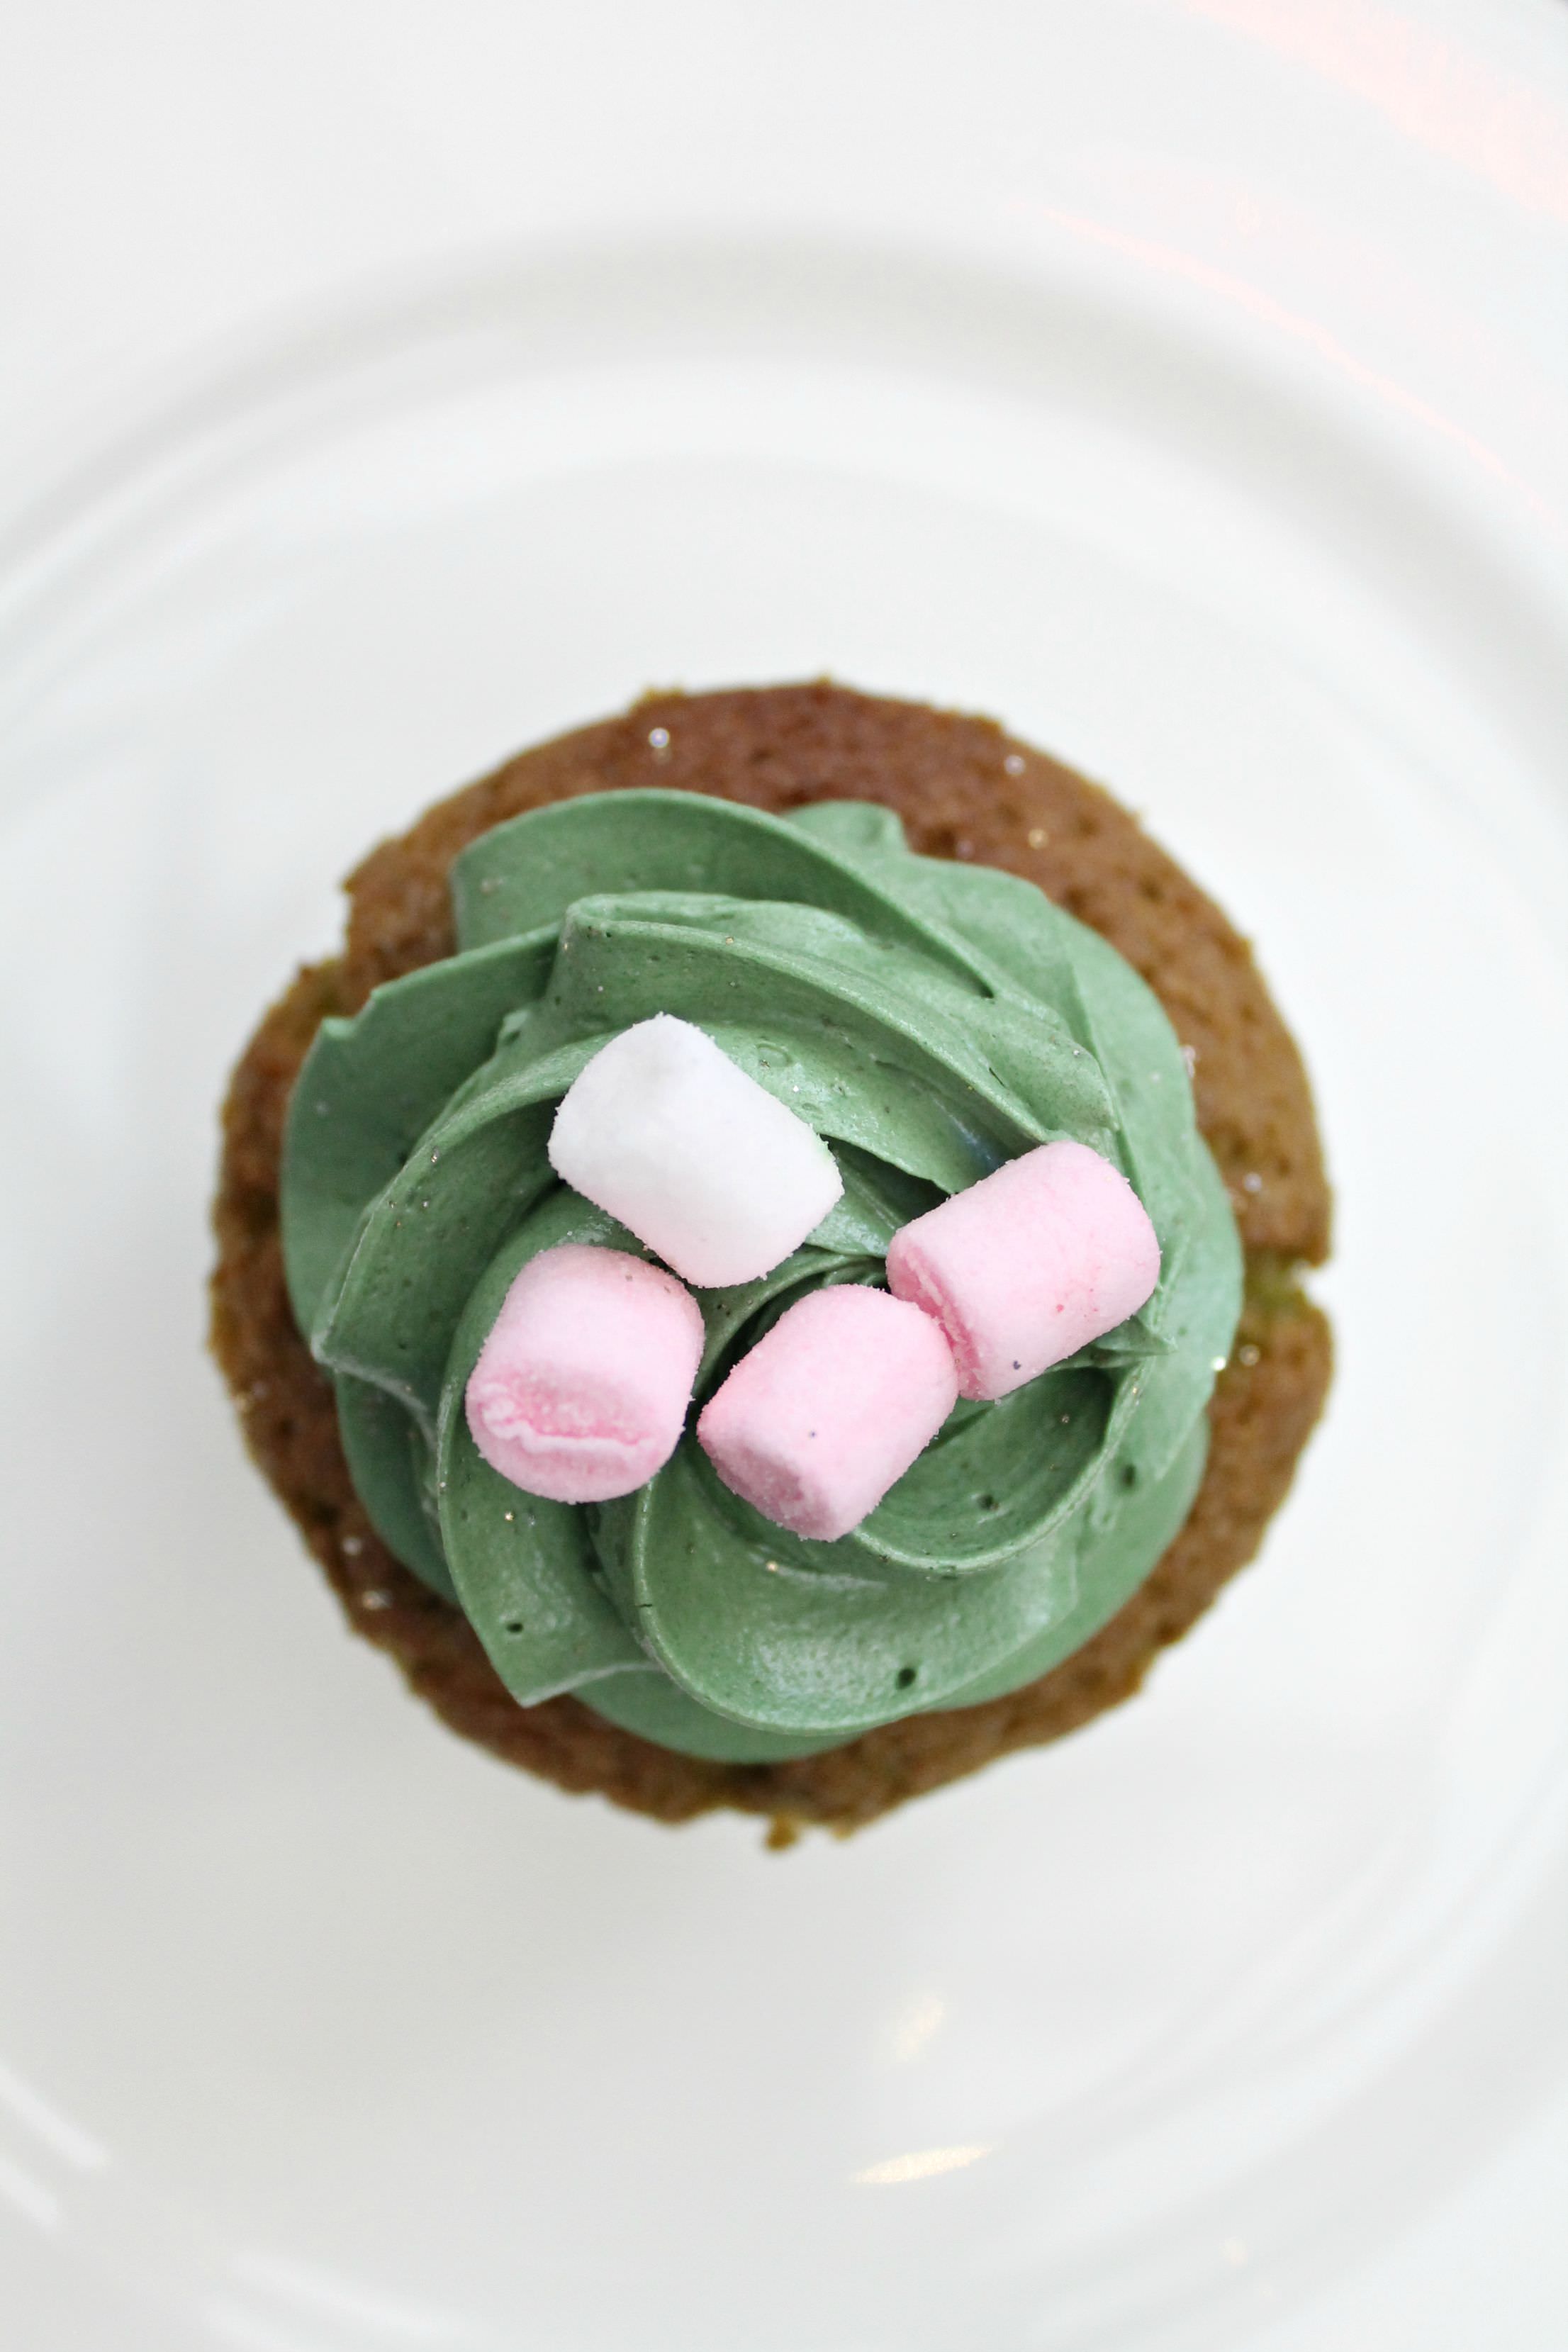 green-tea-cake-le-meridien-photo-by-Little-Big-Bell